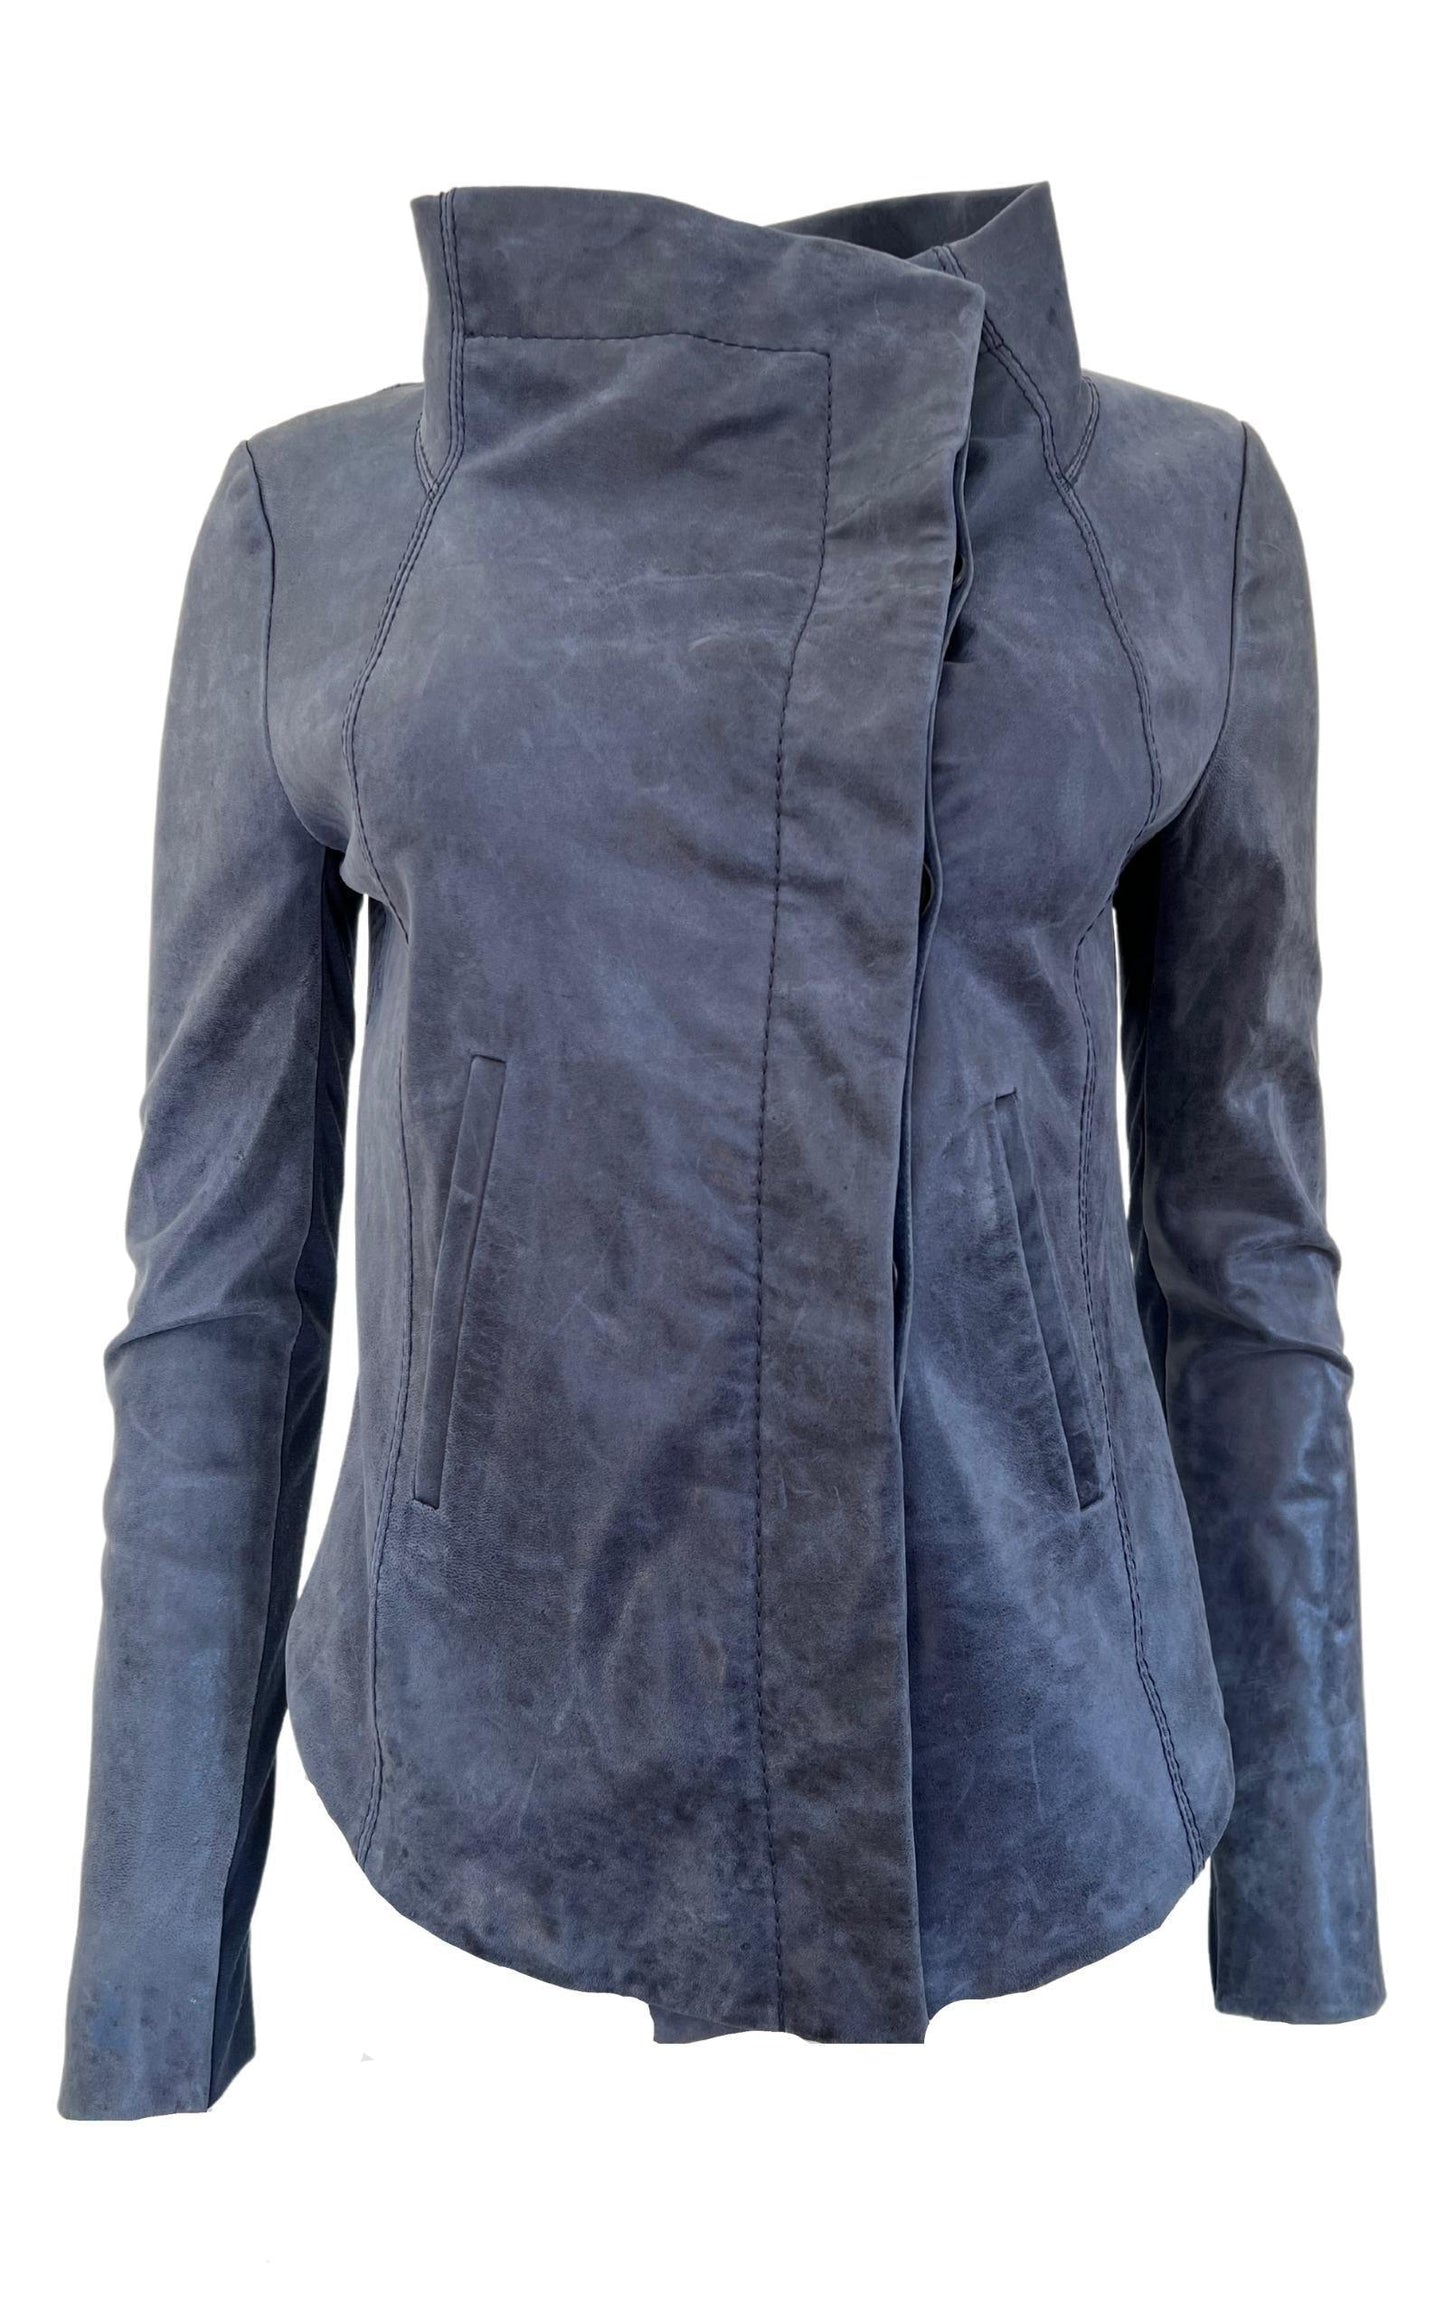  BCBGMAXAZRIAMoto Blue Leather Jacket - Runway Catalog